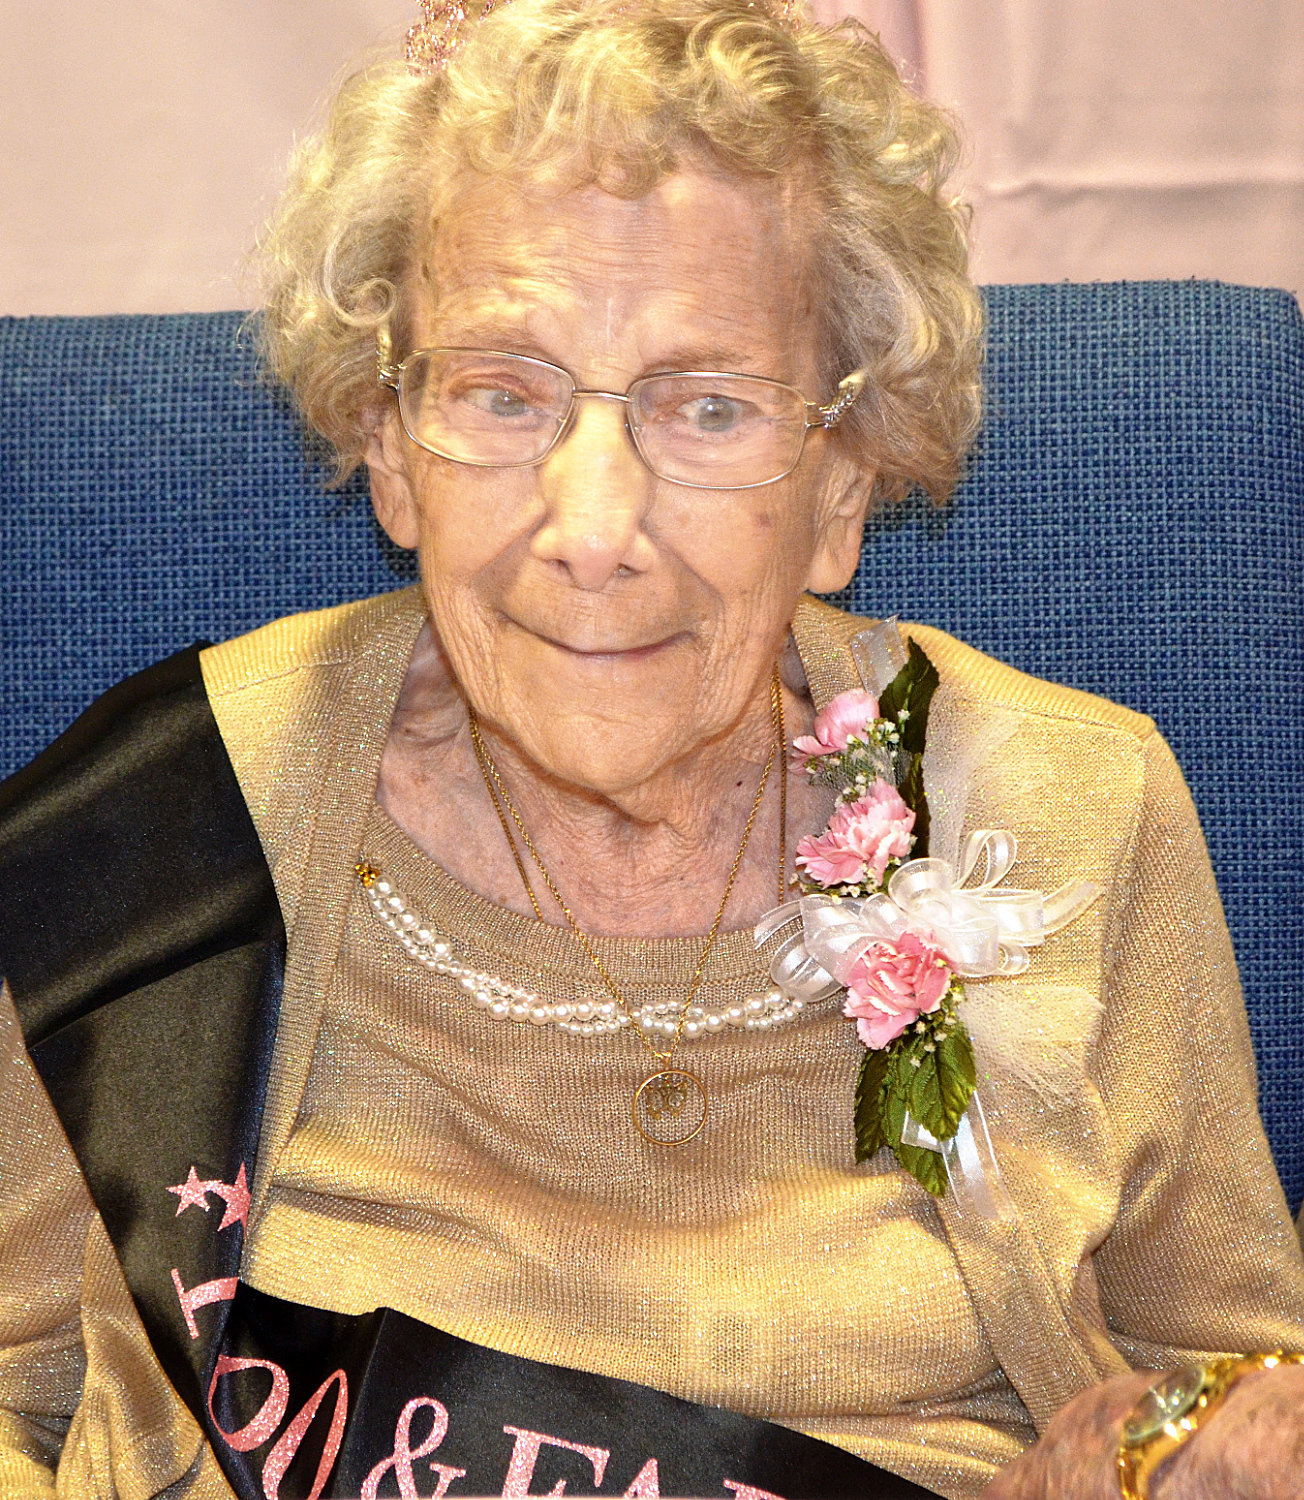 Arlene Lobdell at her 100th birthday party.